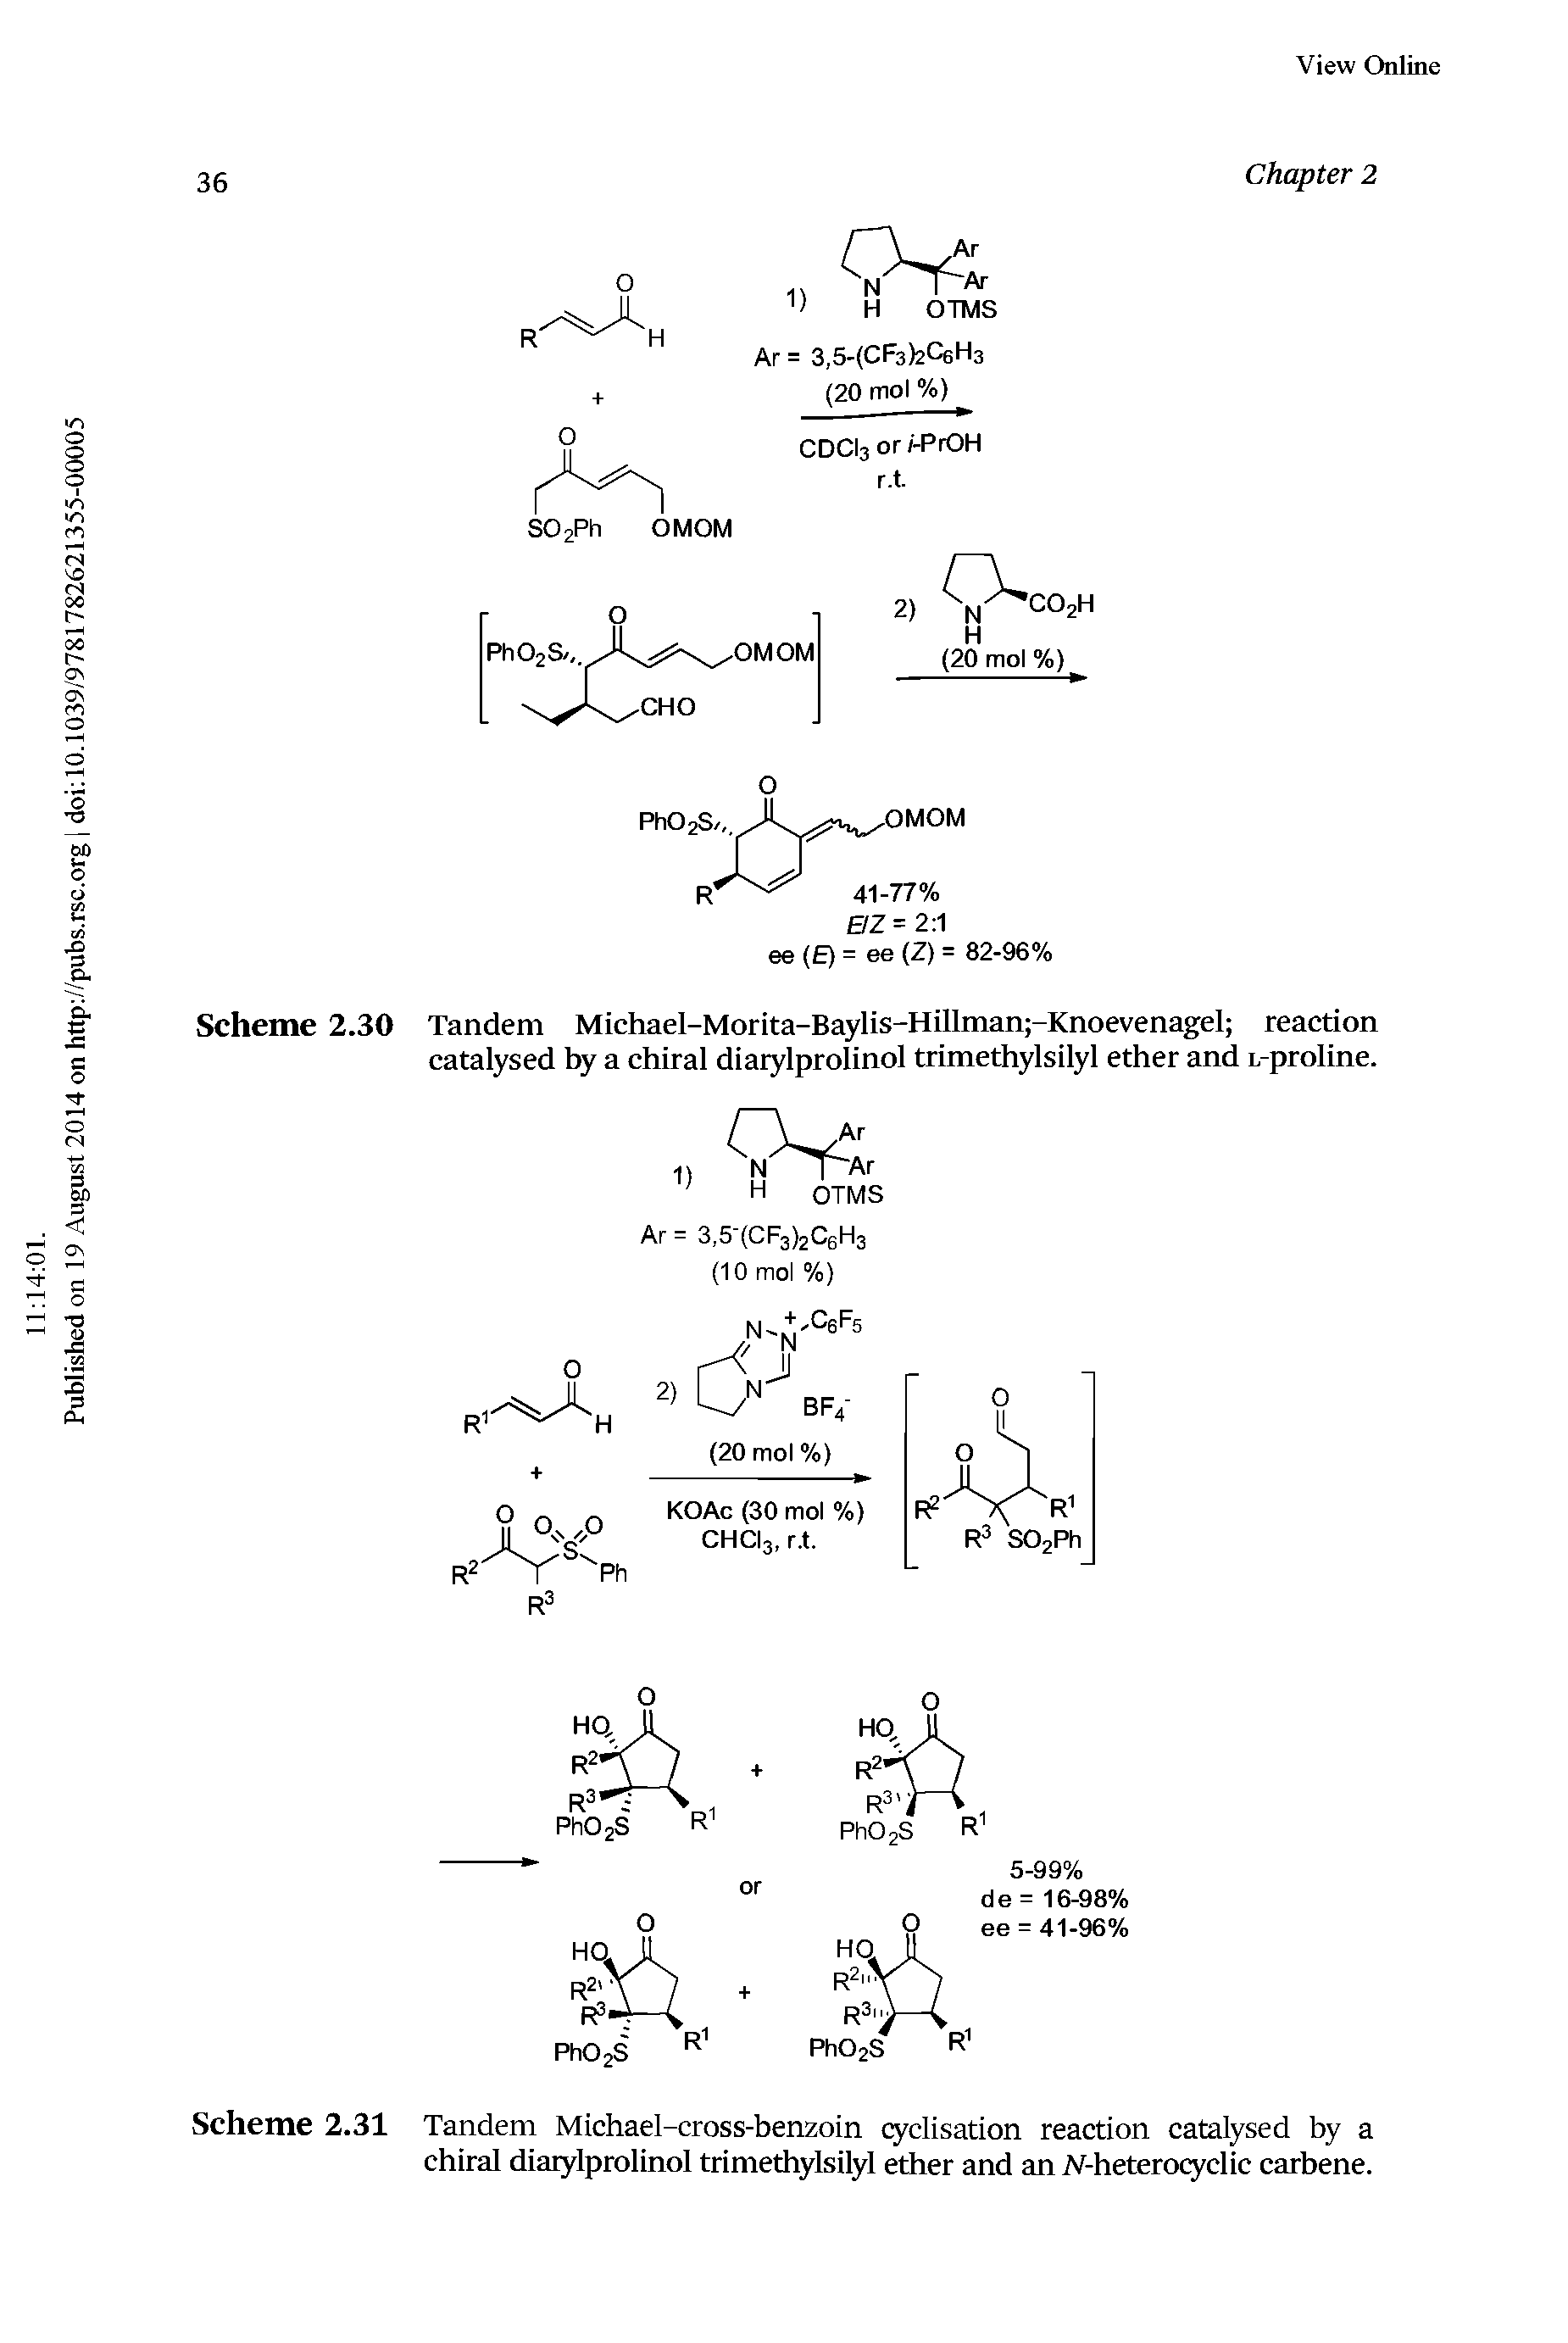 Scheme 2.30 Tandem Michael-Morita-Baylis-Hillman -Knoevenagel reaction catalysed by a chiral diarylprolinol trimethylsilyl ether and L-proline.